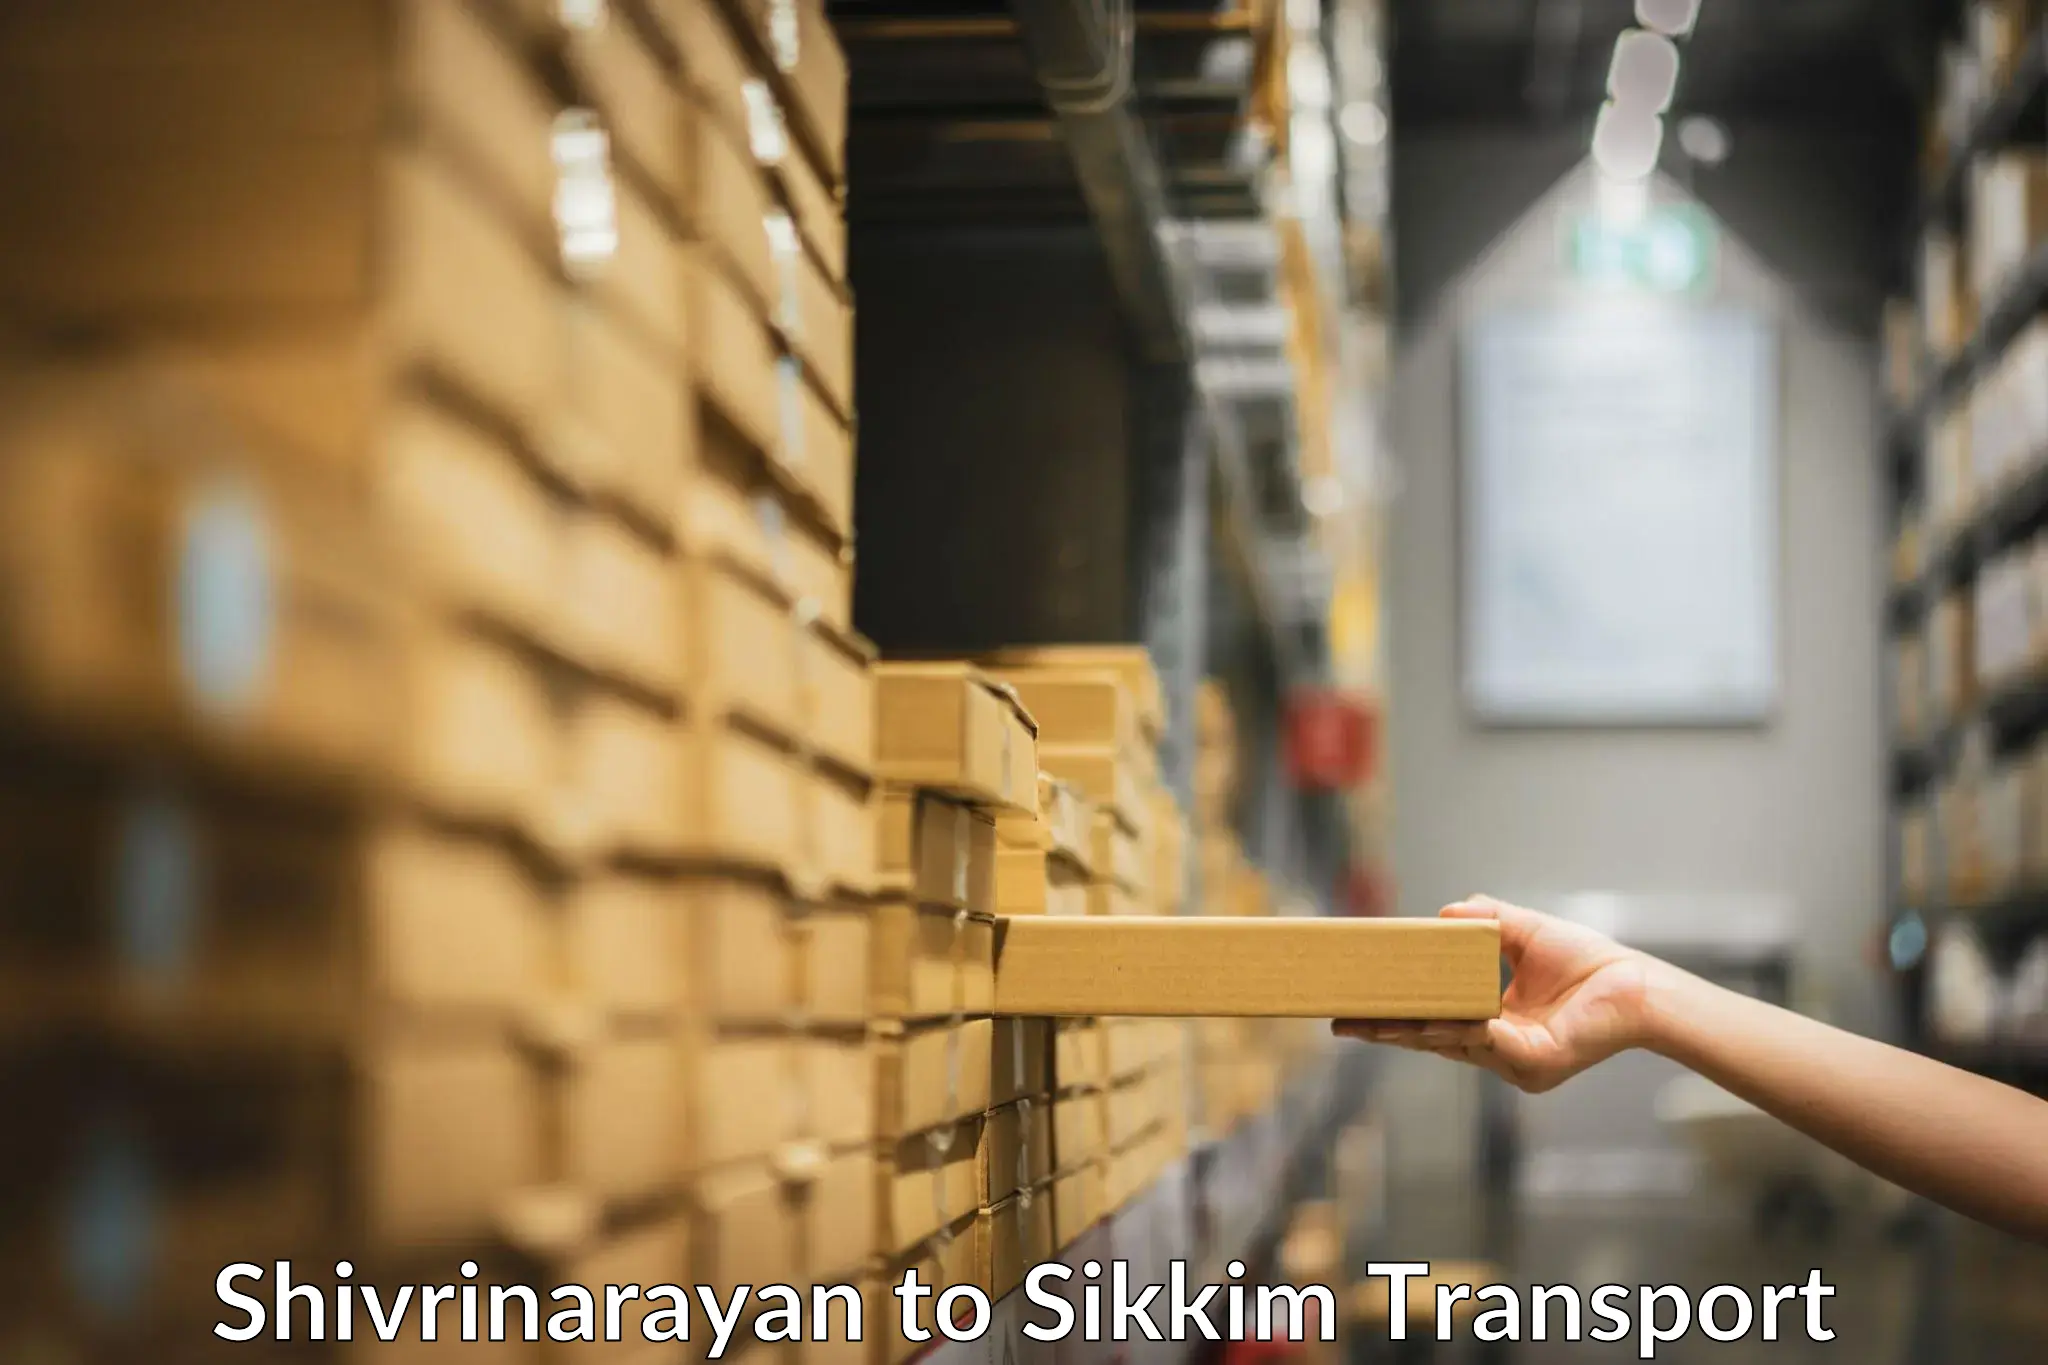 Truck transport companies in India Shivrinarayan to Mangan